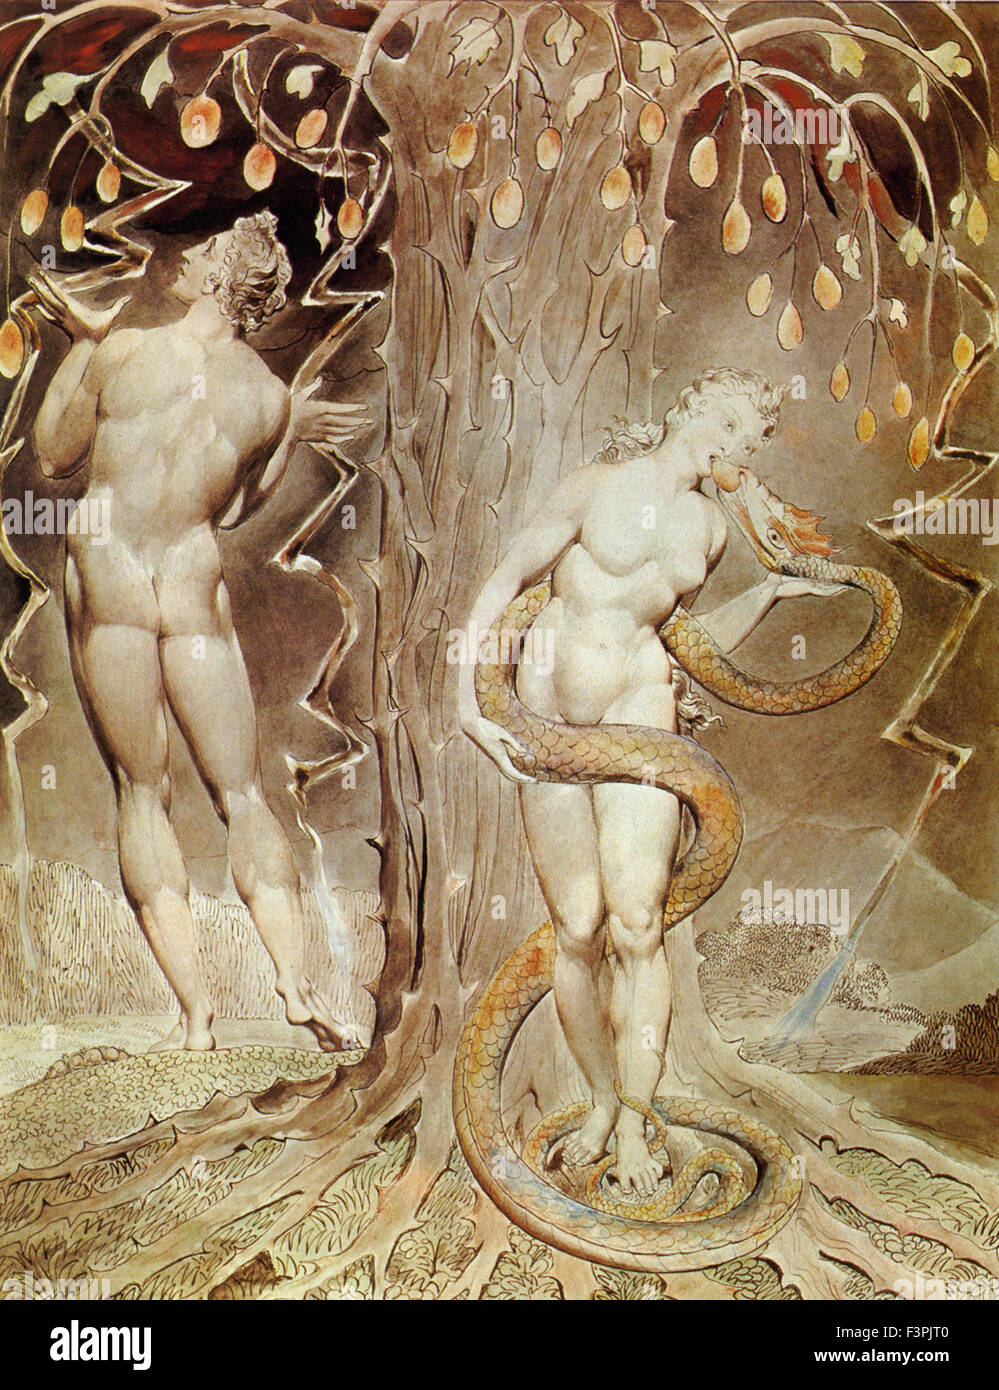 William BLake - Adam and Eve 1808 Stock Photo